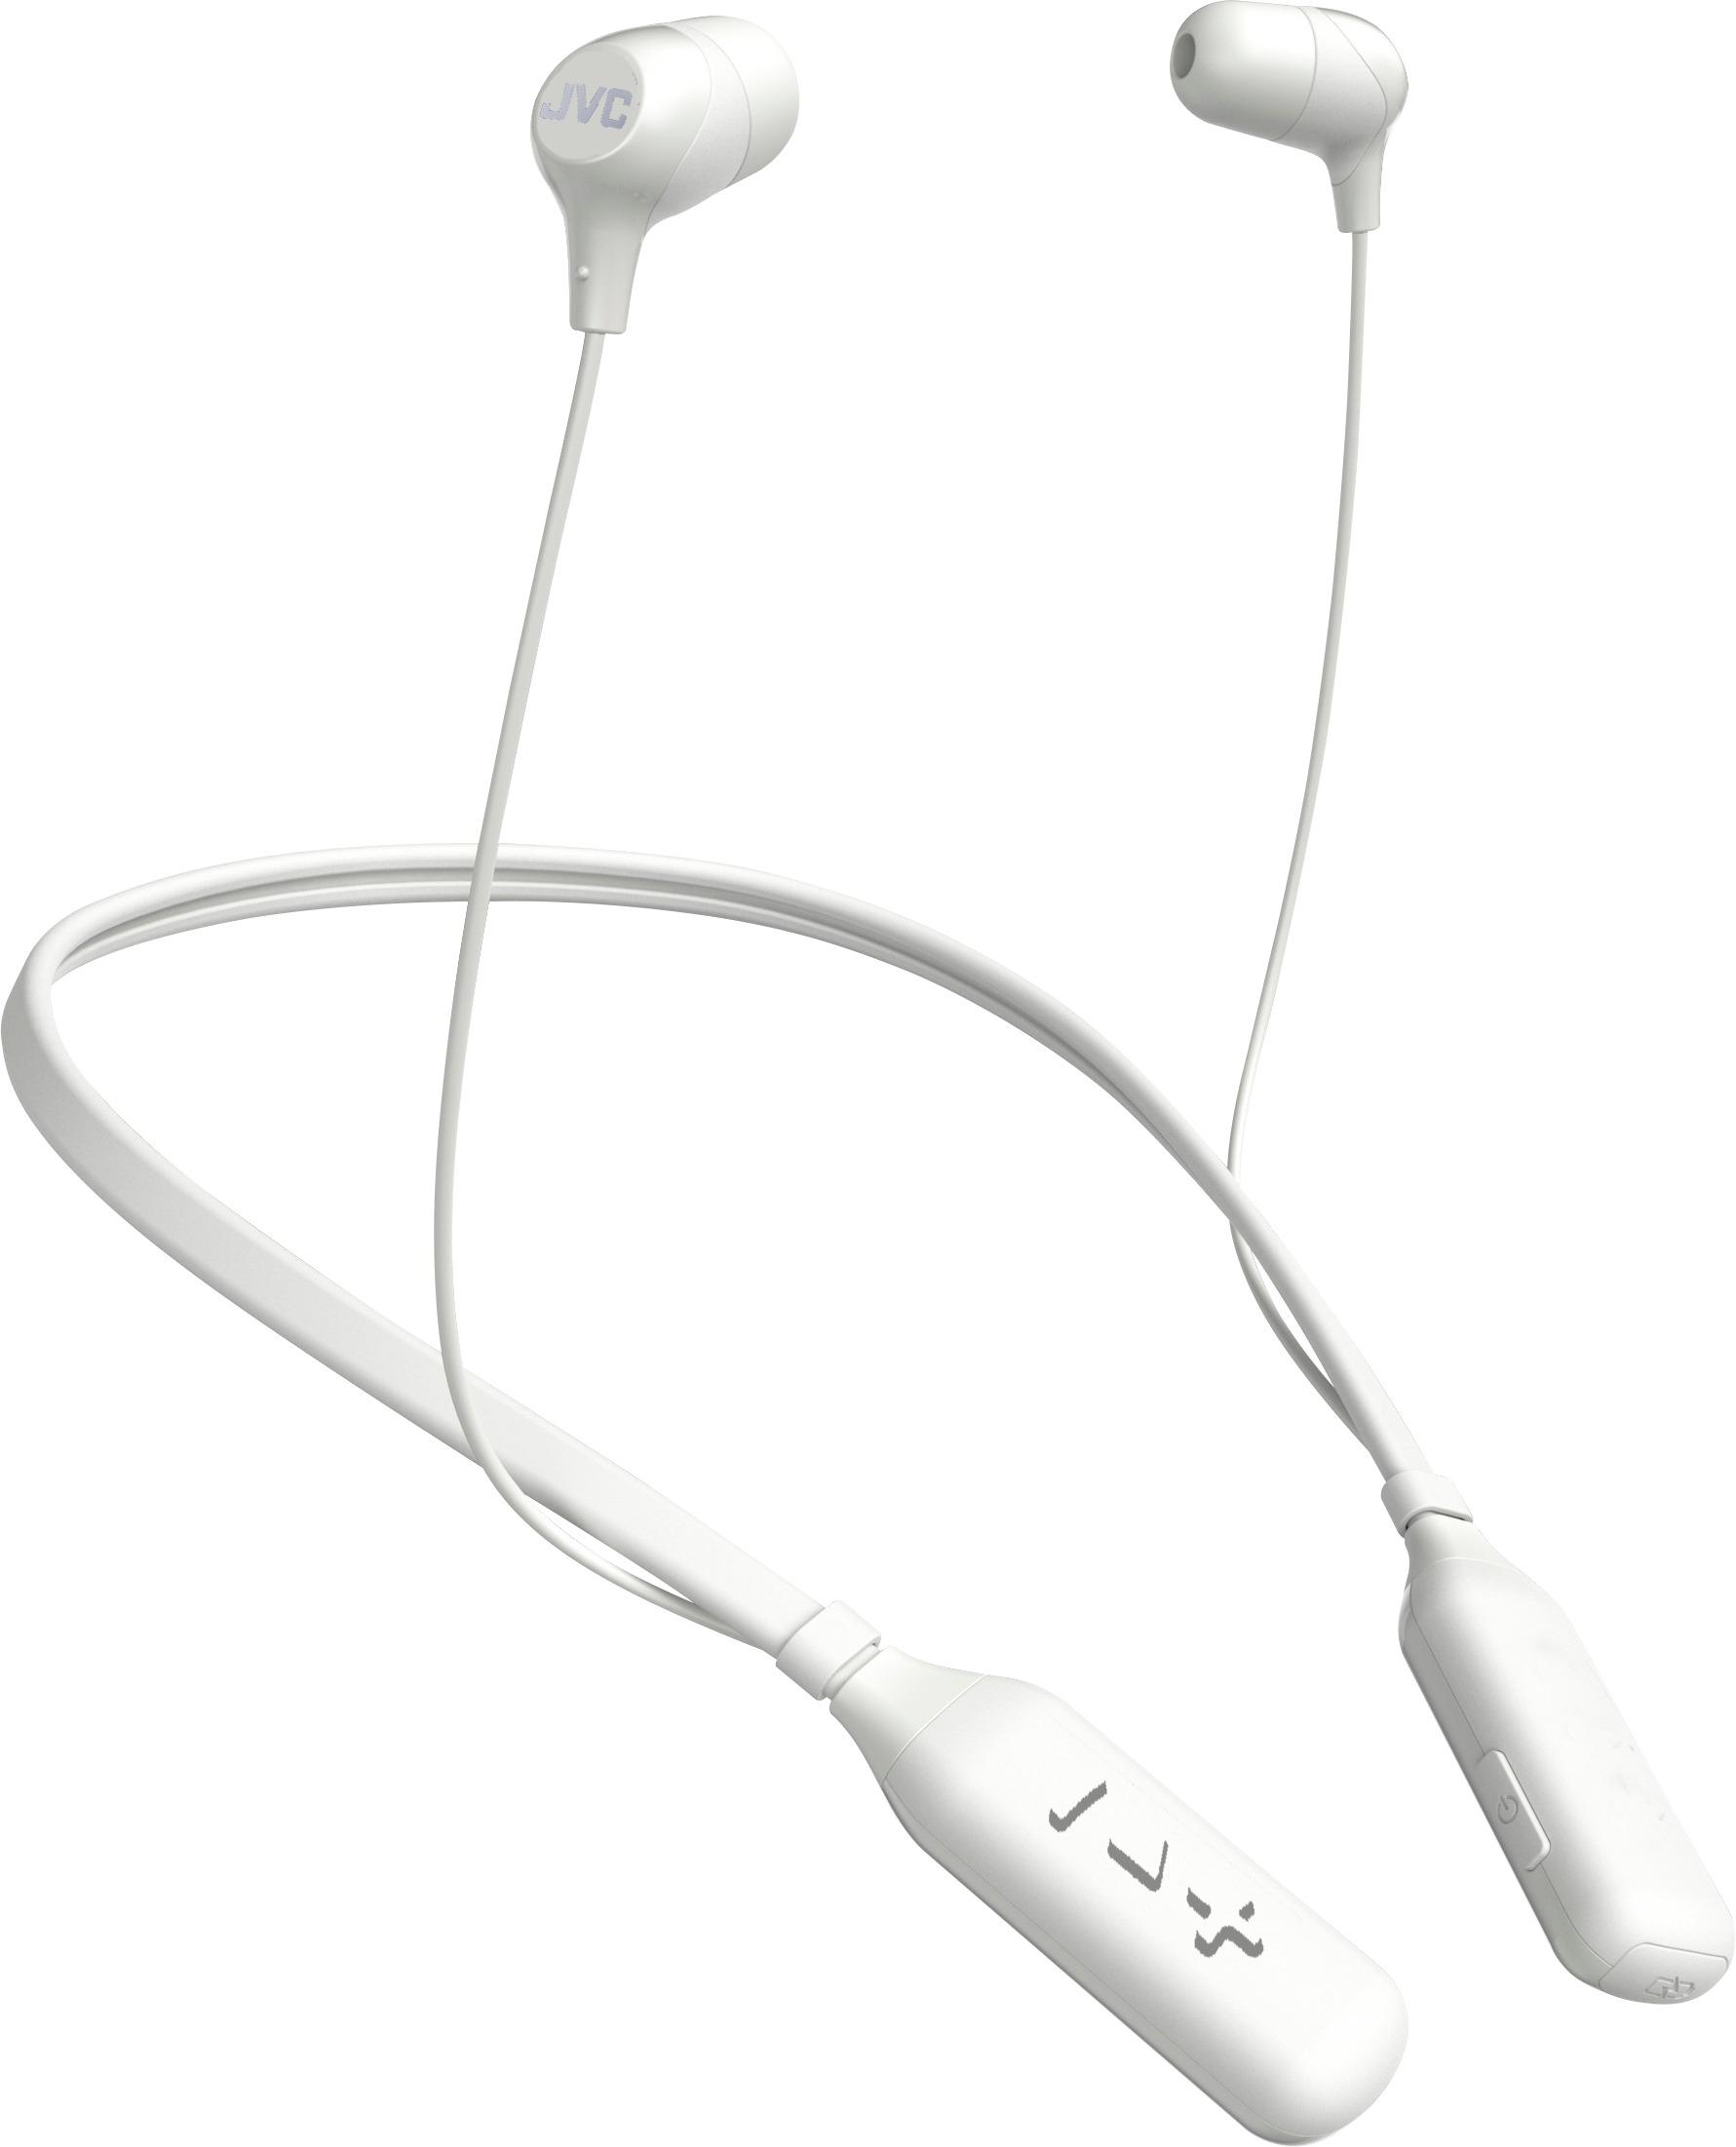 Angle View: JVC - HA FX39BT Marshmallow Wireless In-Ear Headphones - White